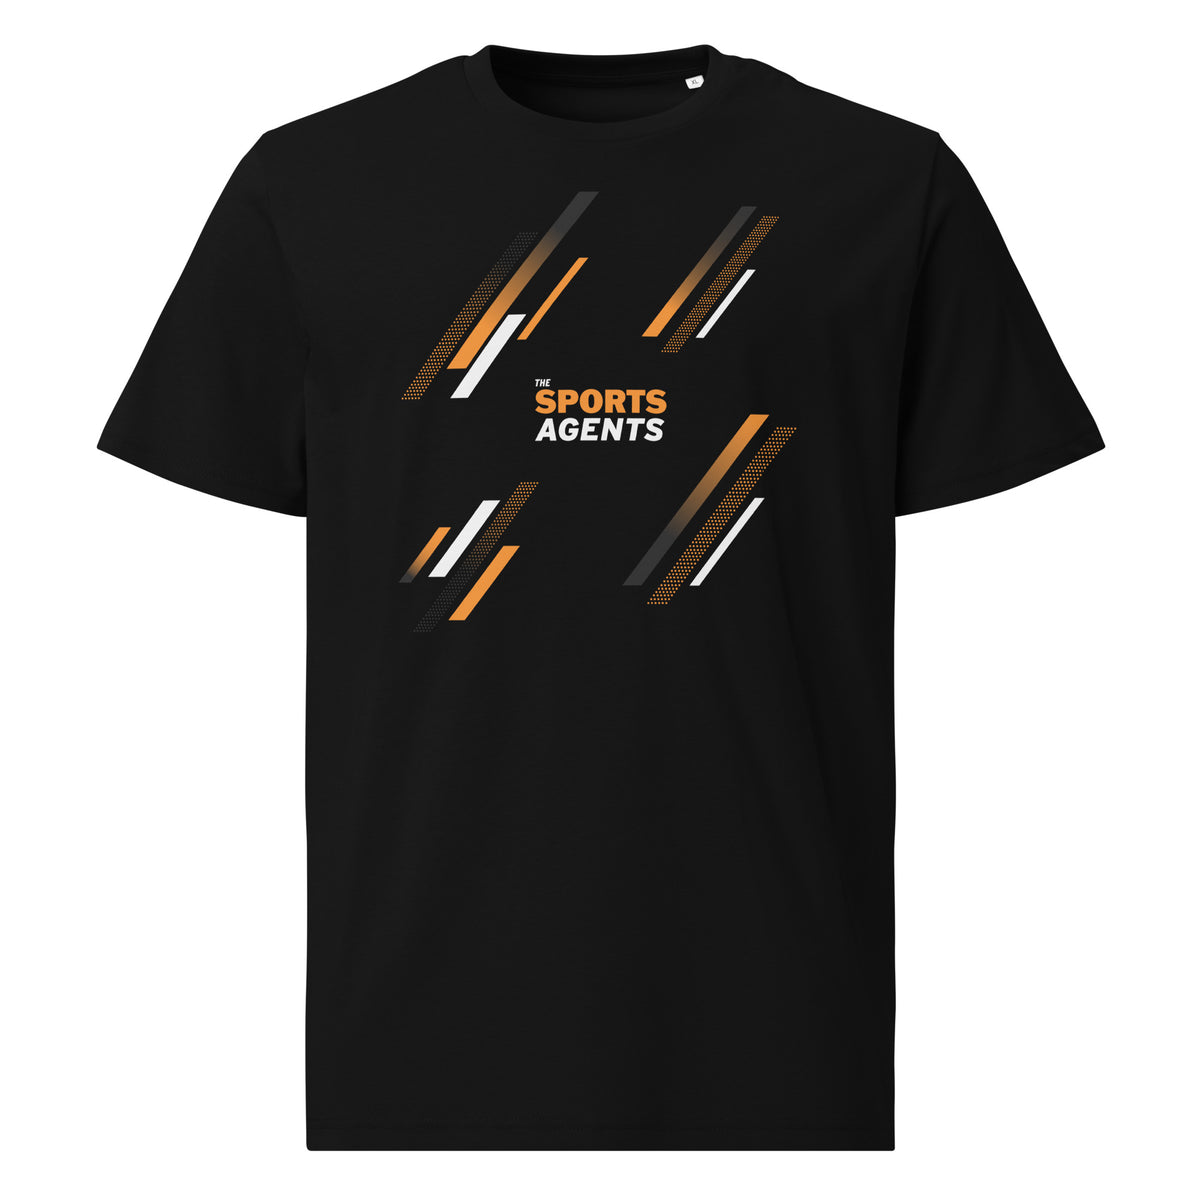 The Sports Agents Unisex Black T-Shirt